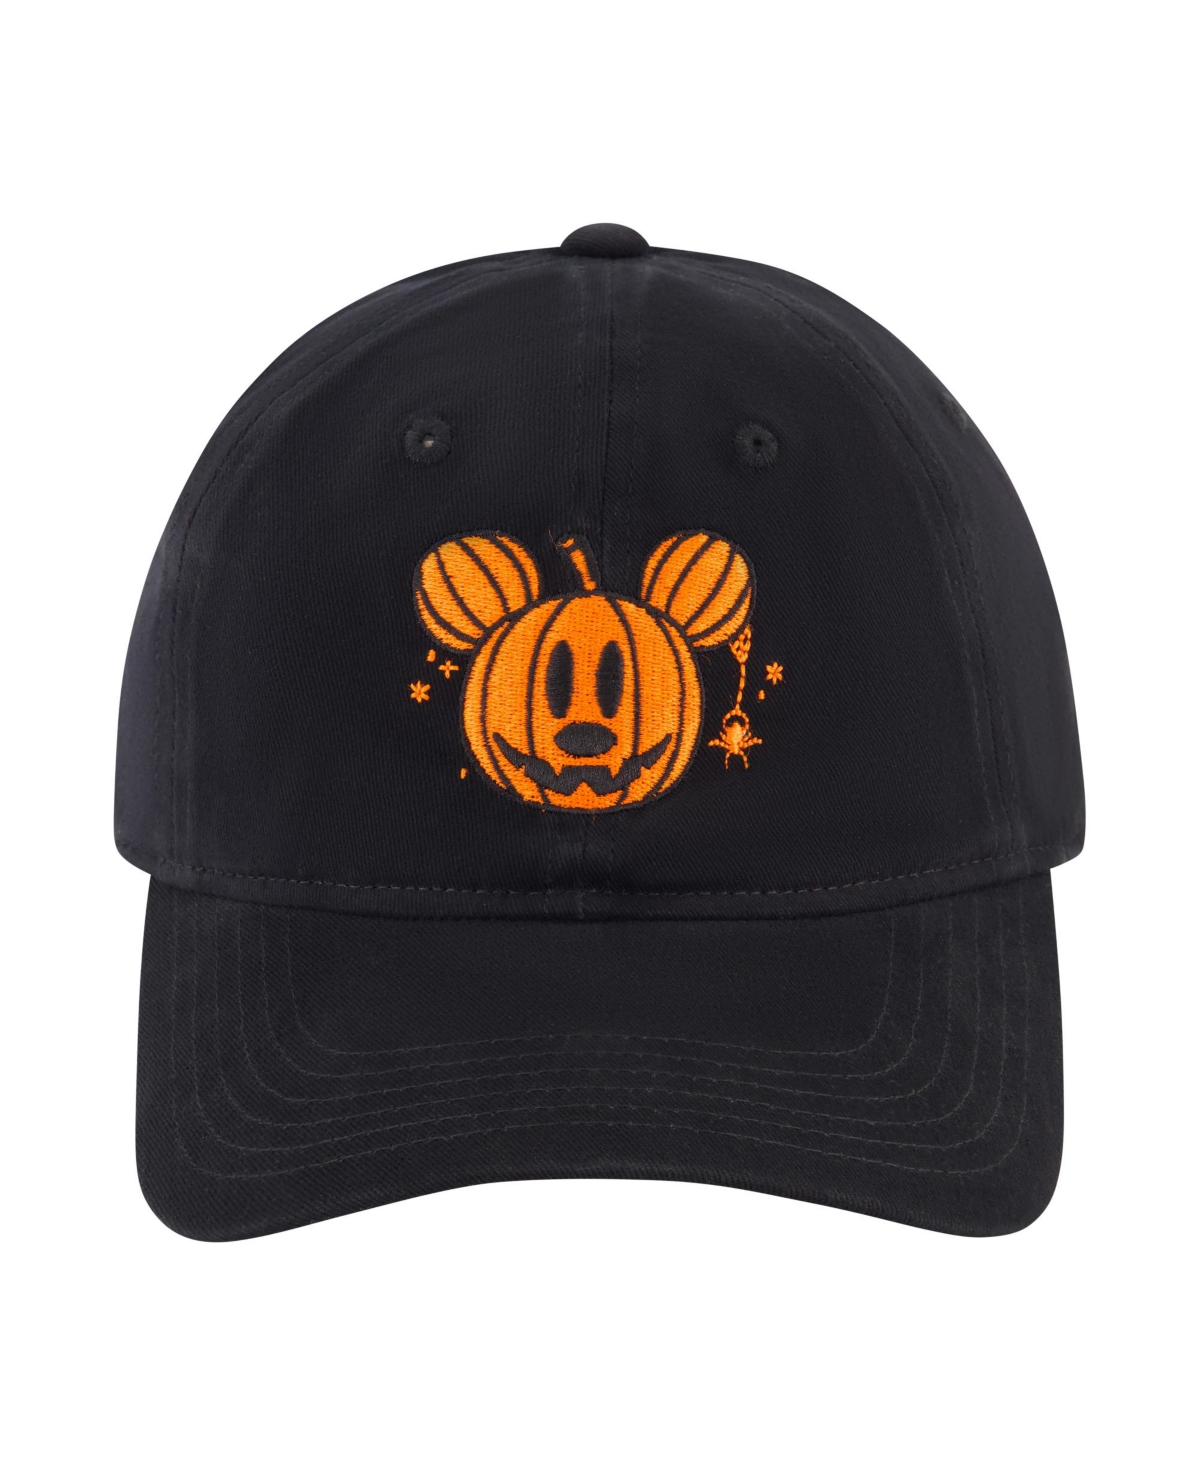 Men's Mickey Mouse Pumpkin Head With Plaid Underbrim Hat - Black